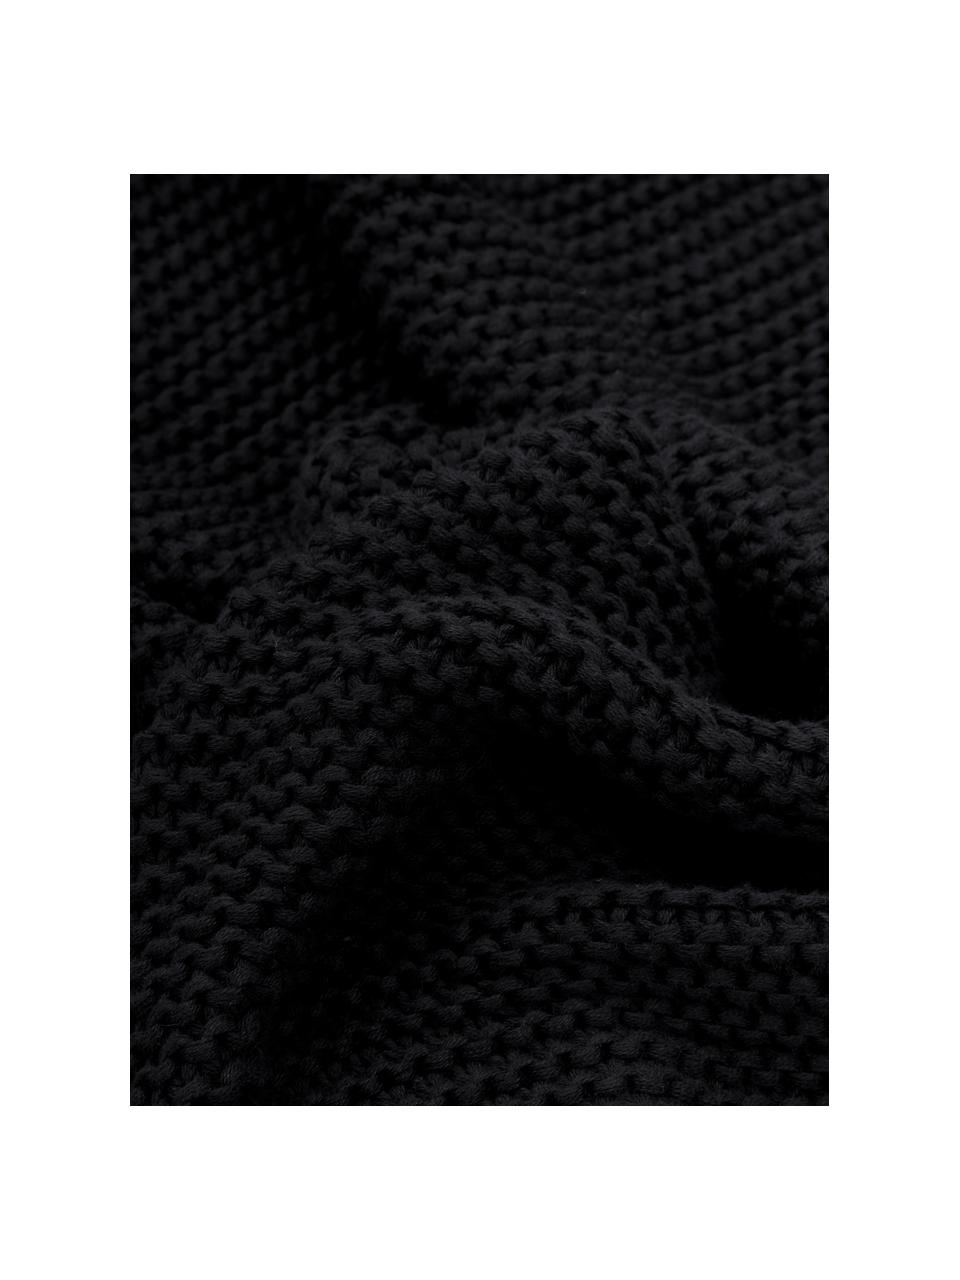 Strickdecke Adalyn aus Bio-Baumwolle in Schwarz, 100% Bio-Baumwolle, GOTS-zertifiziert, Schwarz, B 150 x L 200 cm